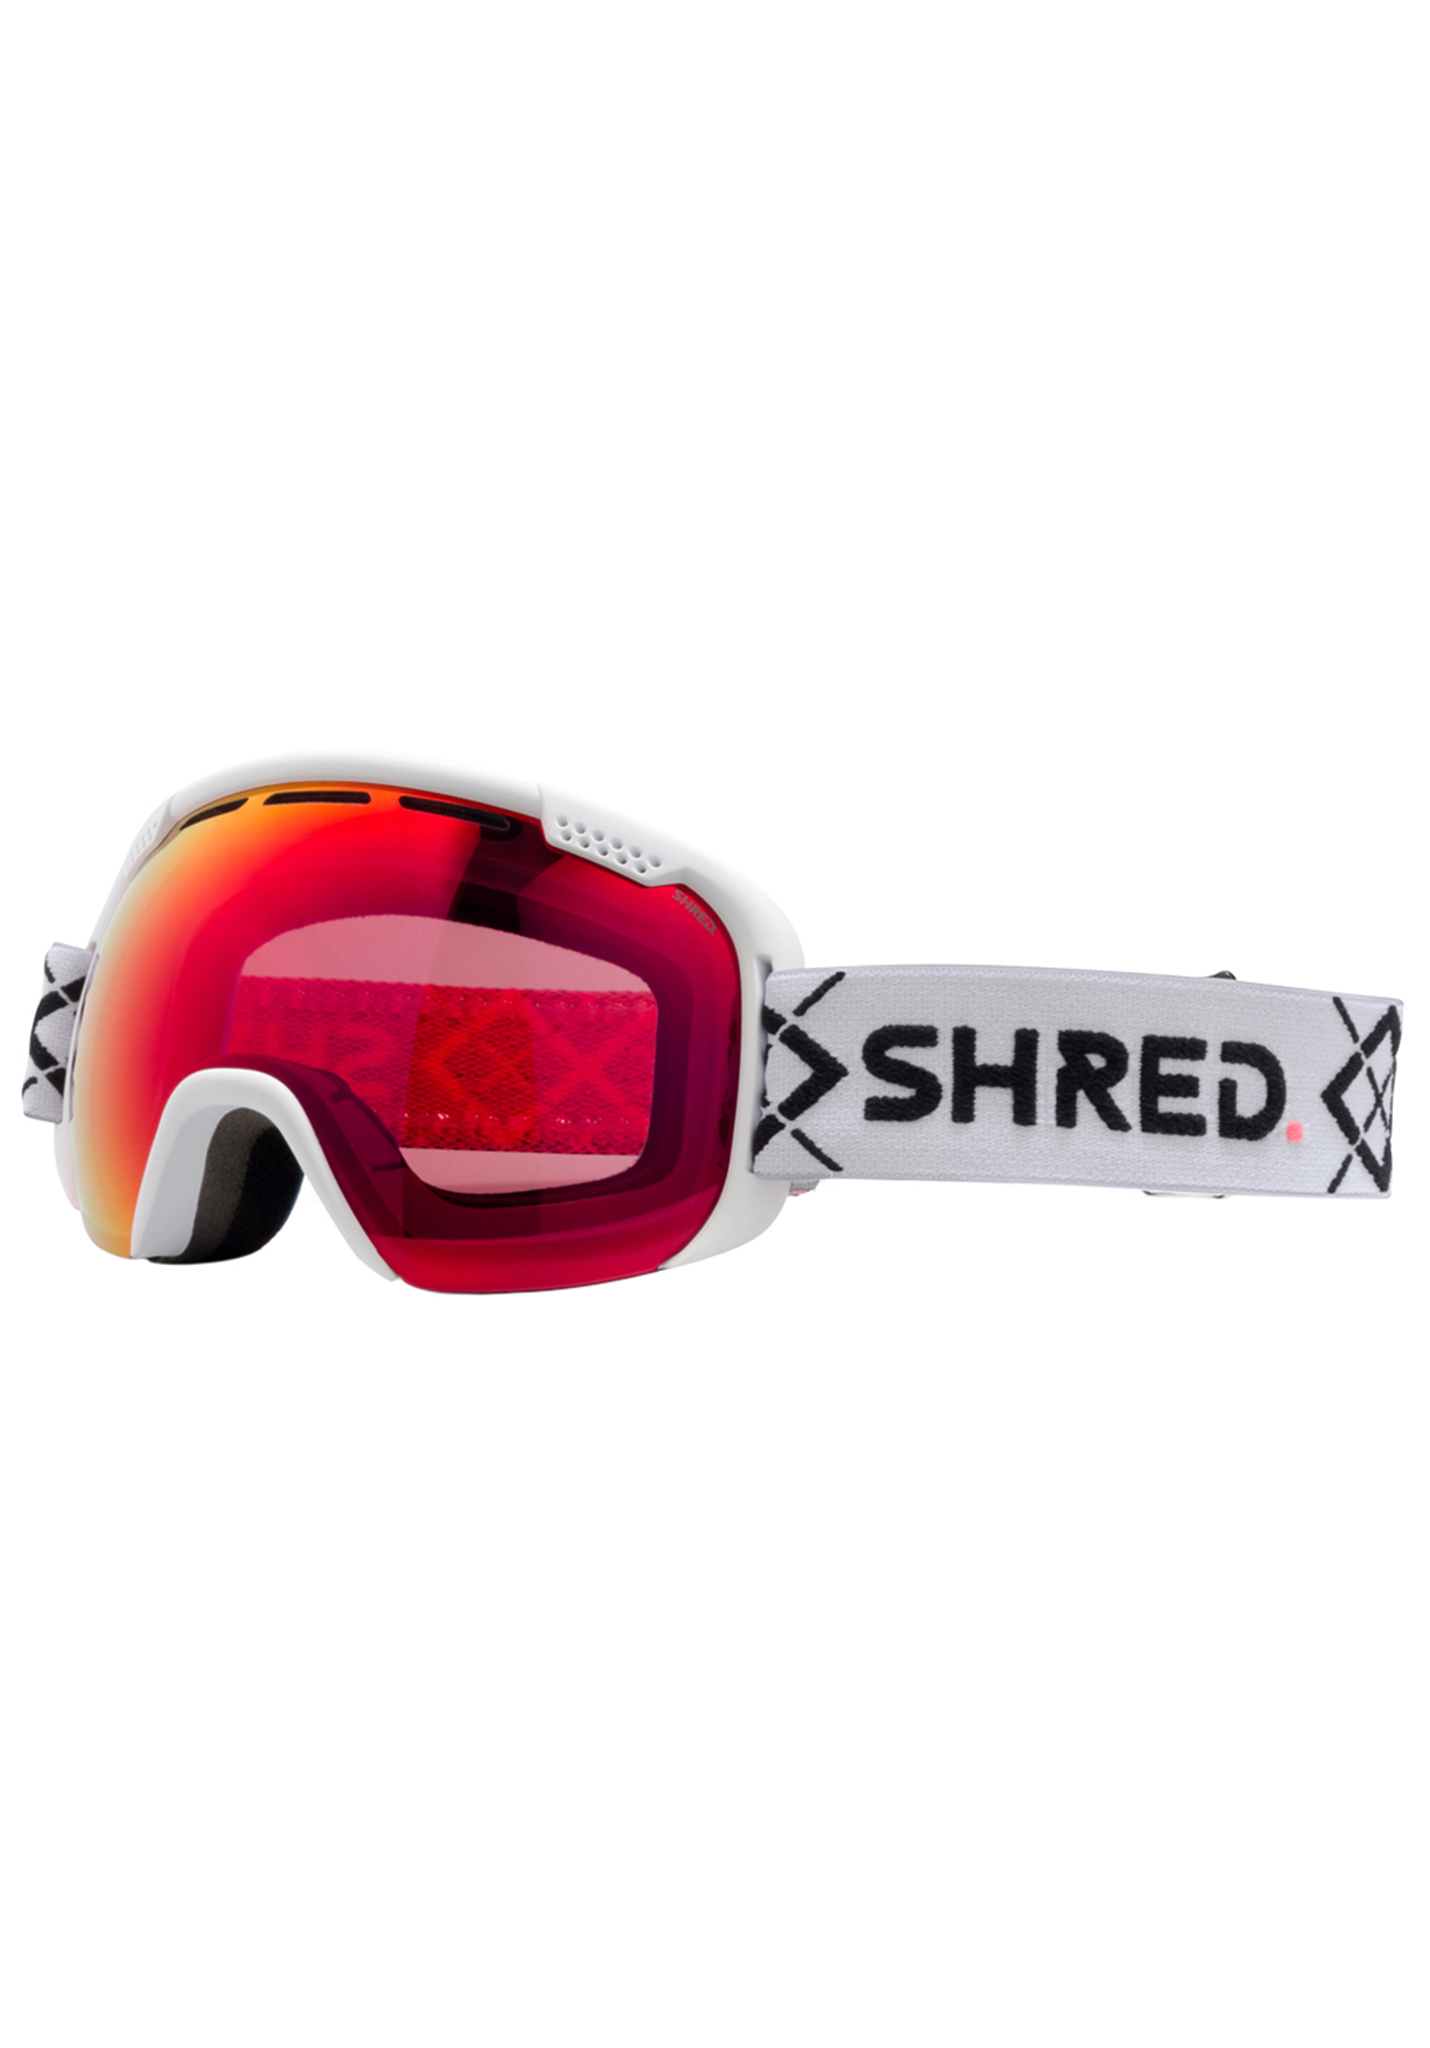 Shred Smartefy Snowboardbrillen bigshow weiß/cbl streuspiegel One Size